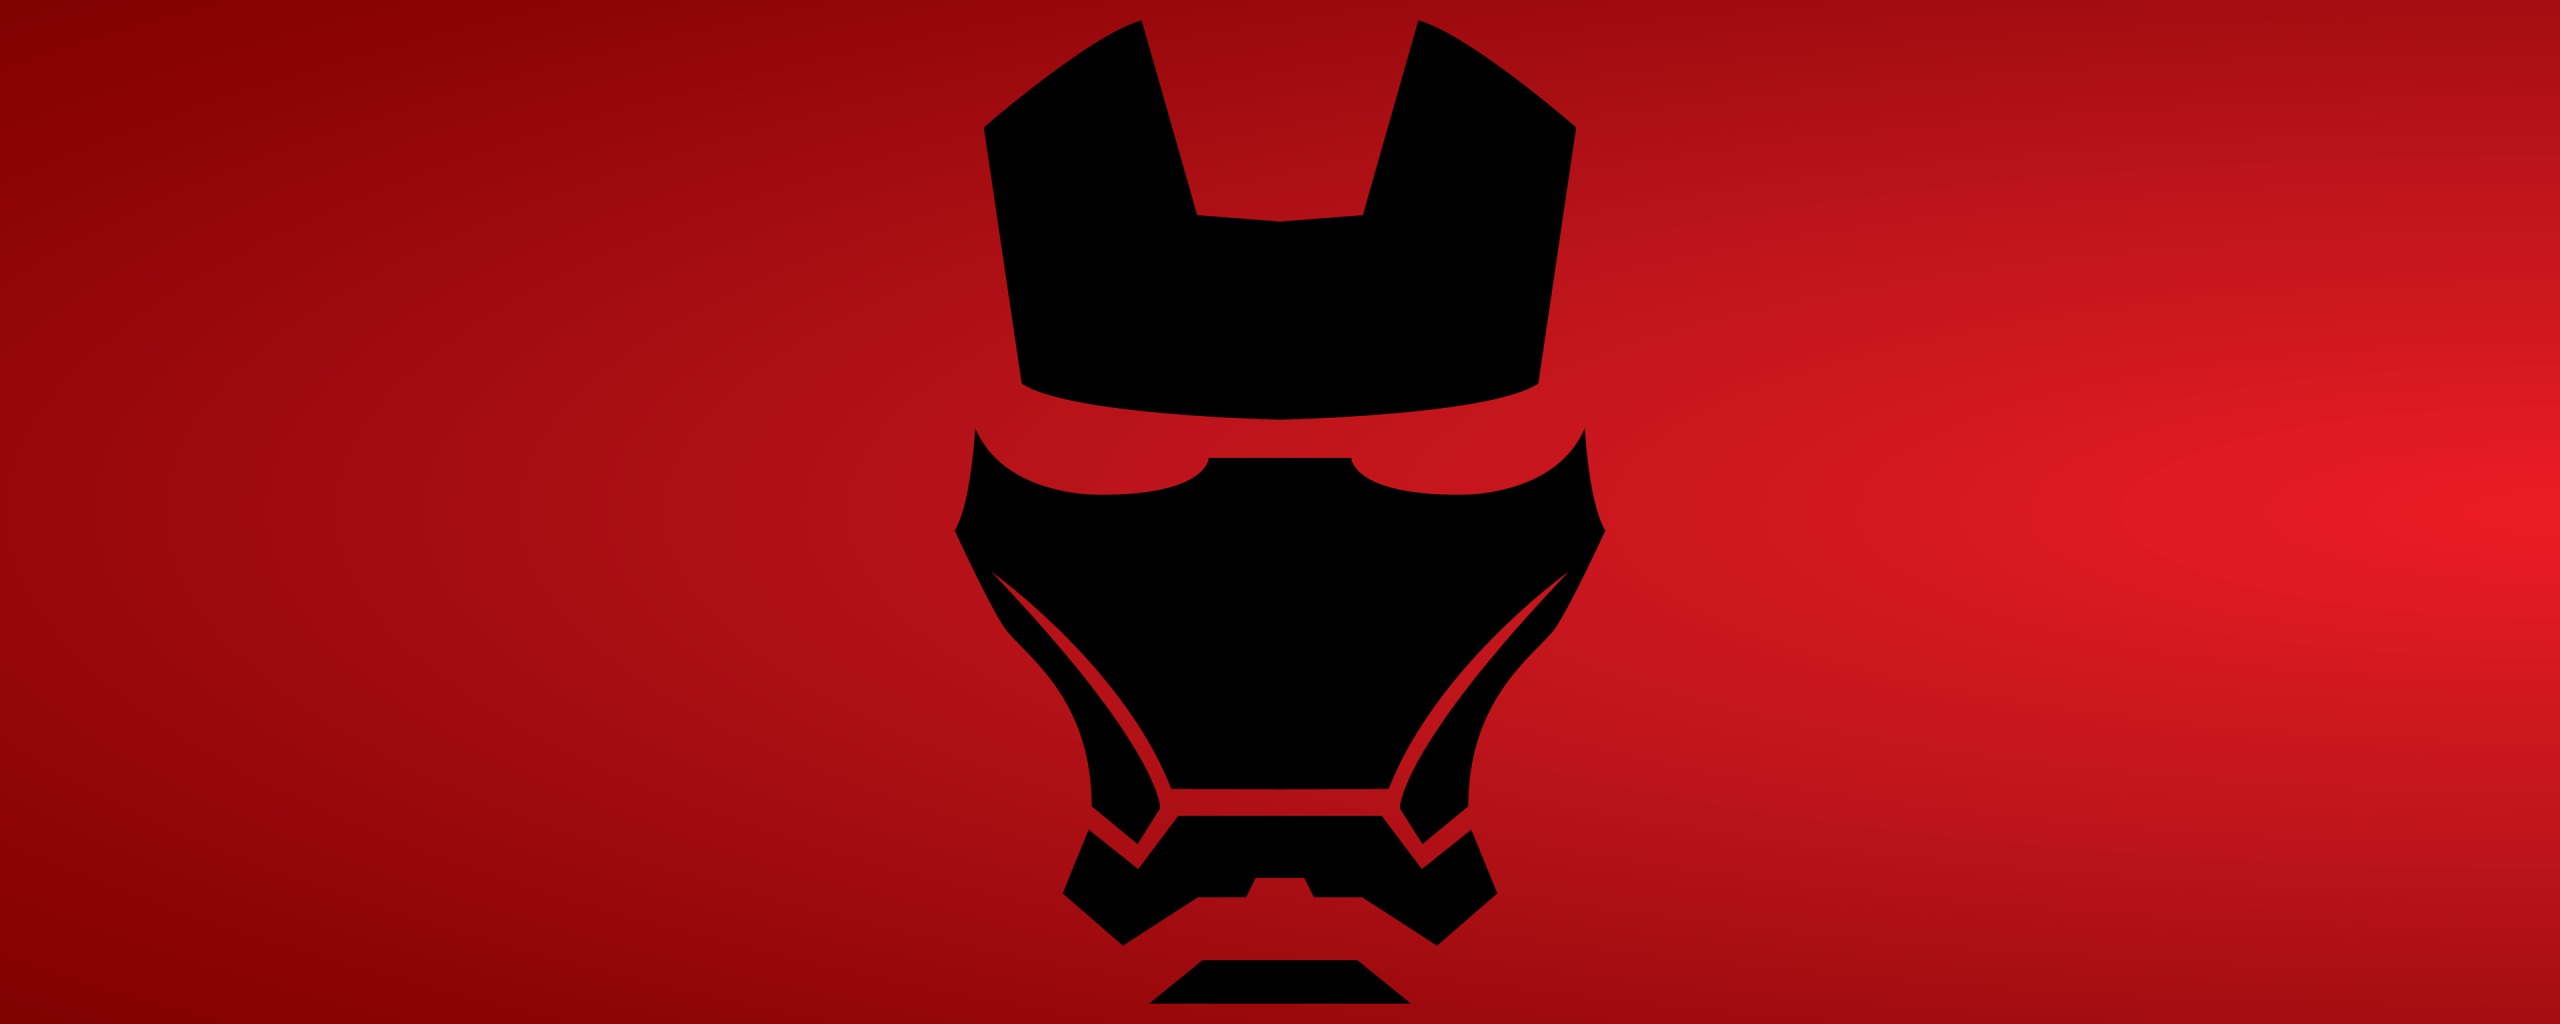 Iron Man Mask Minimalist 8k - 4k Wallpapers - 40.000+ ipad wallpapers ...